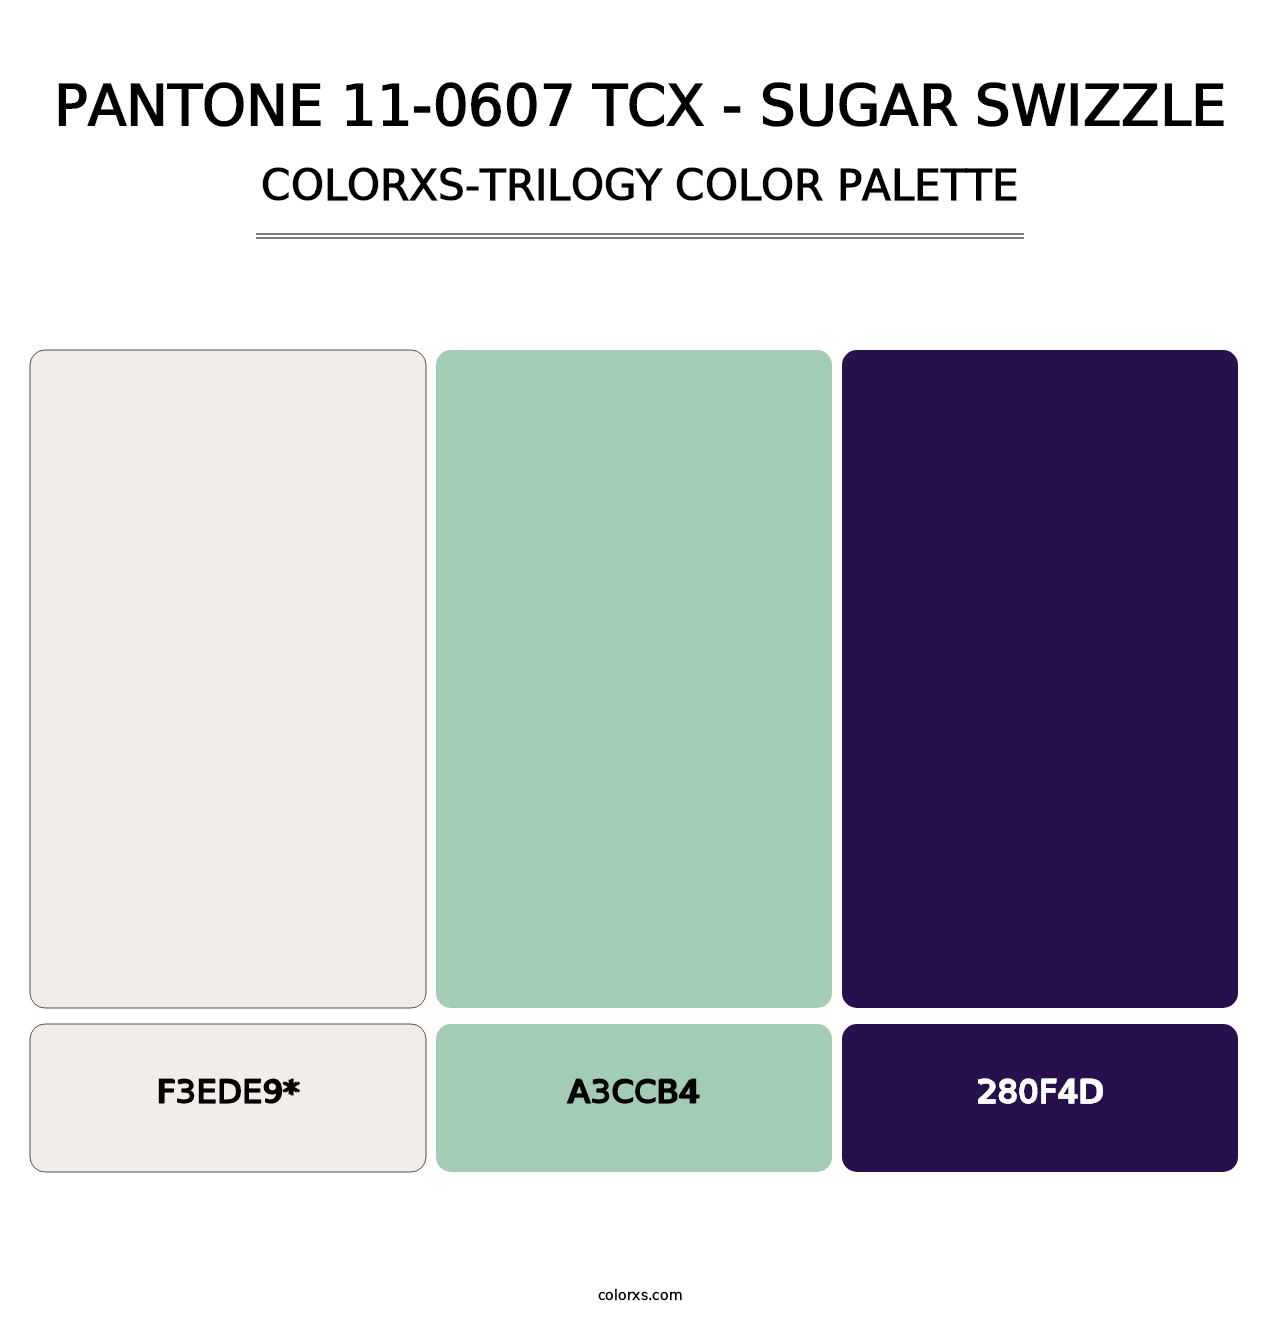 PANTONE 11-0607 TCX - Sugar Swizzle - Colorxs Trilogy Palette